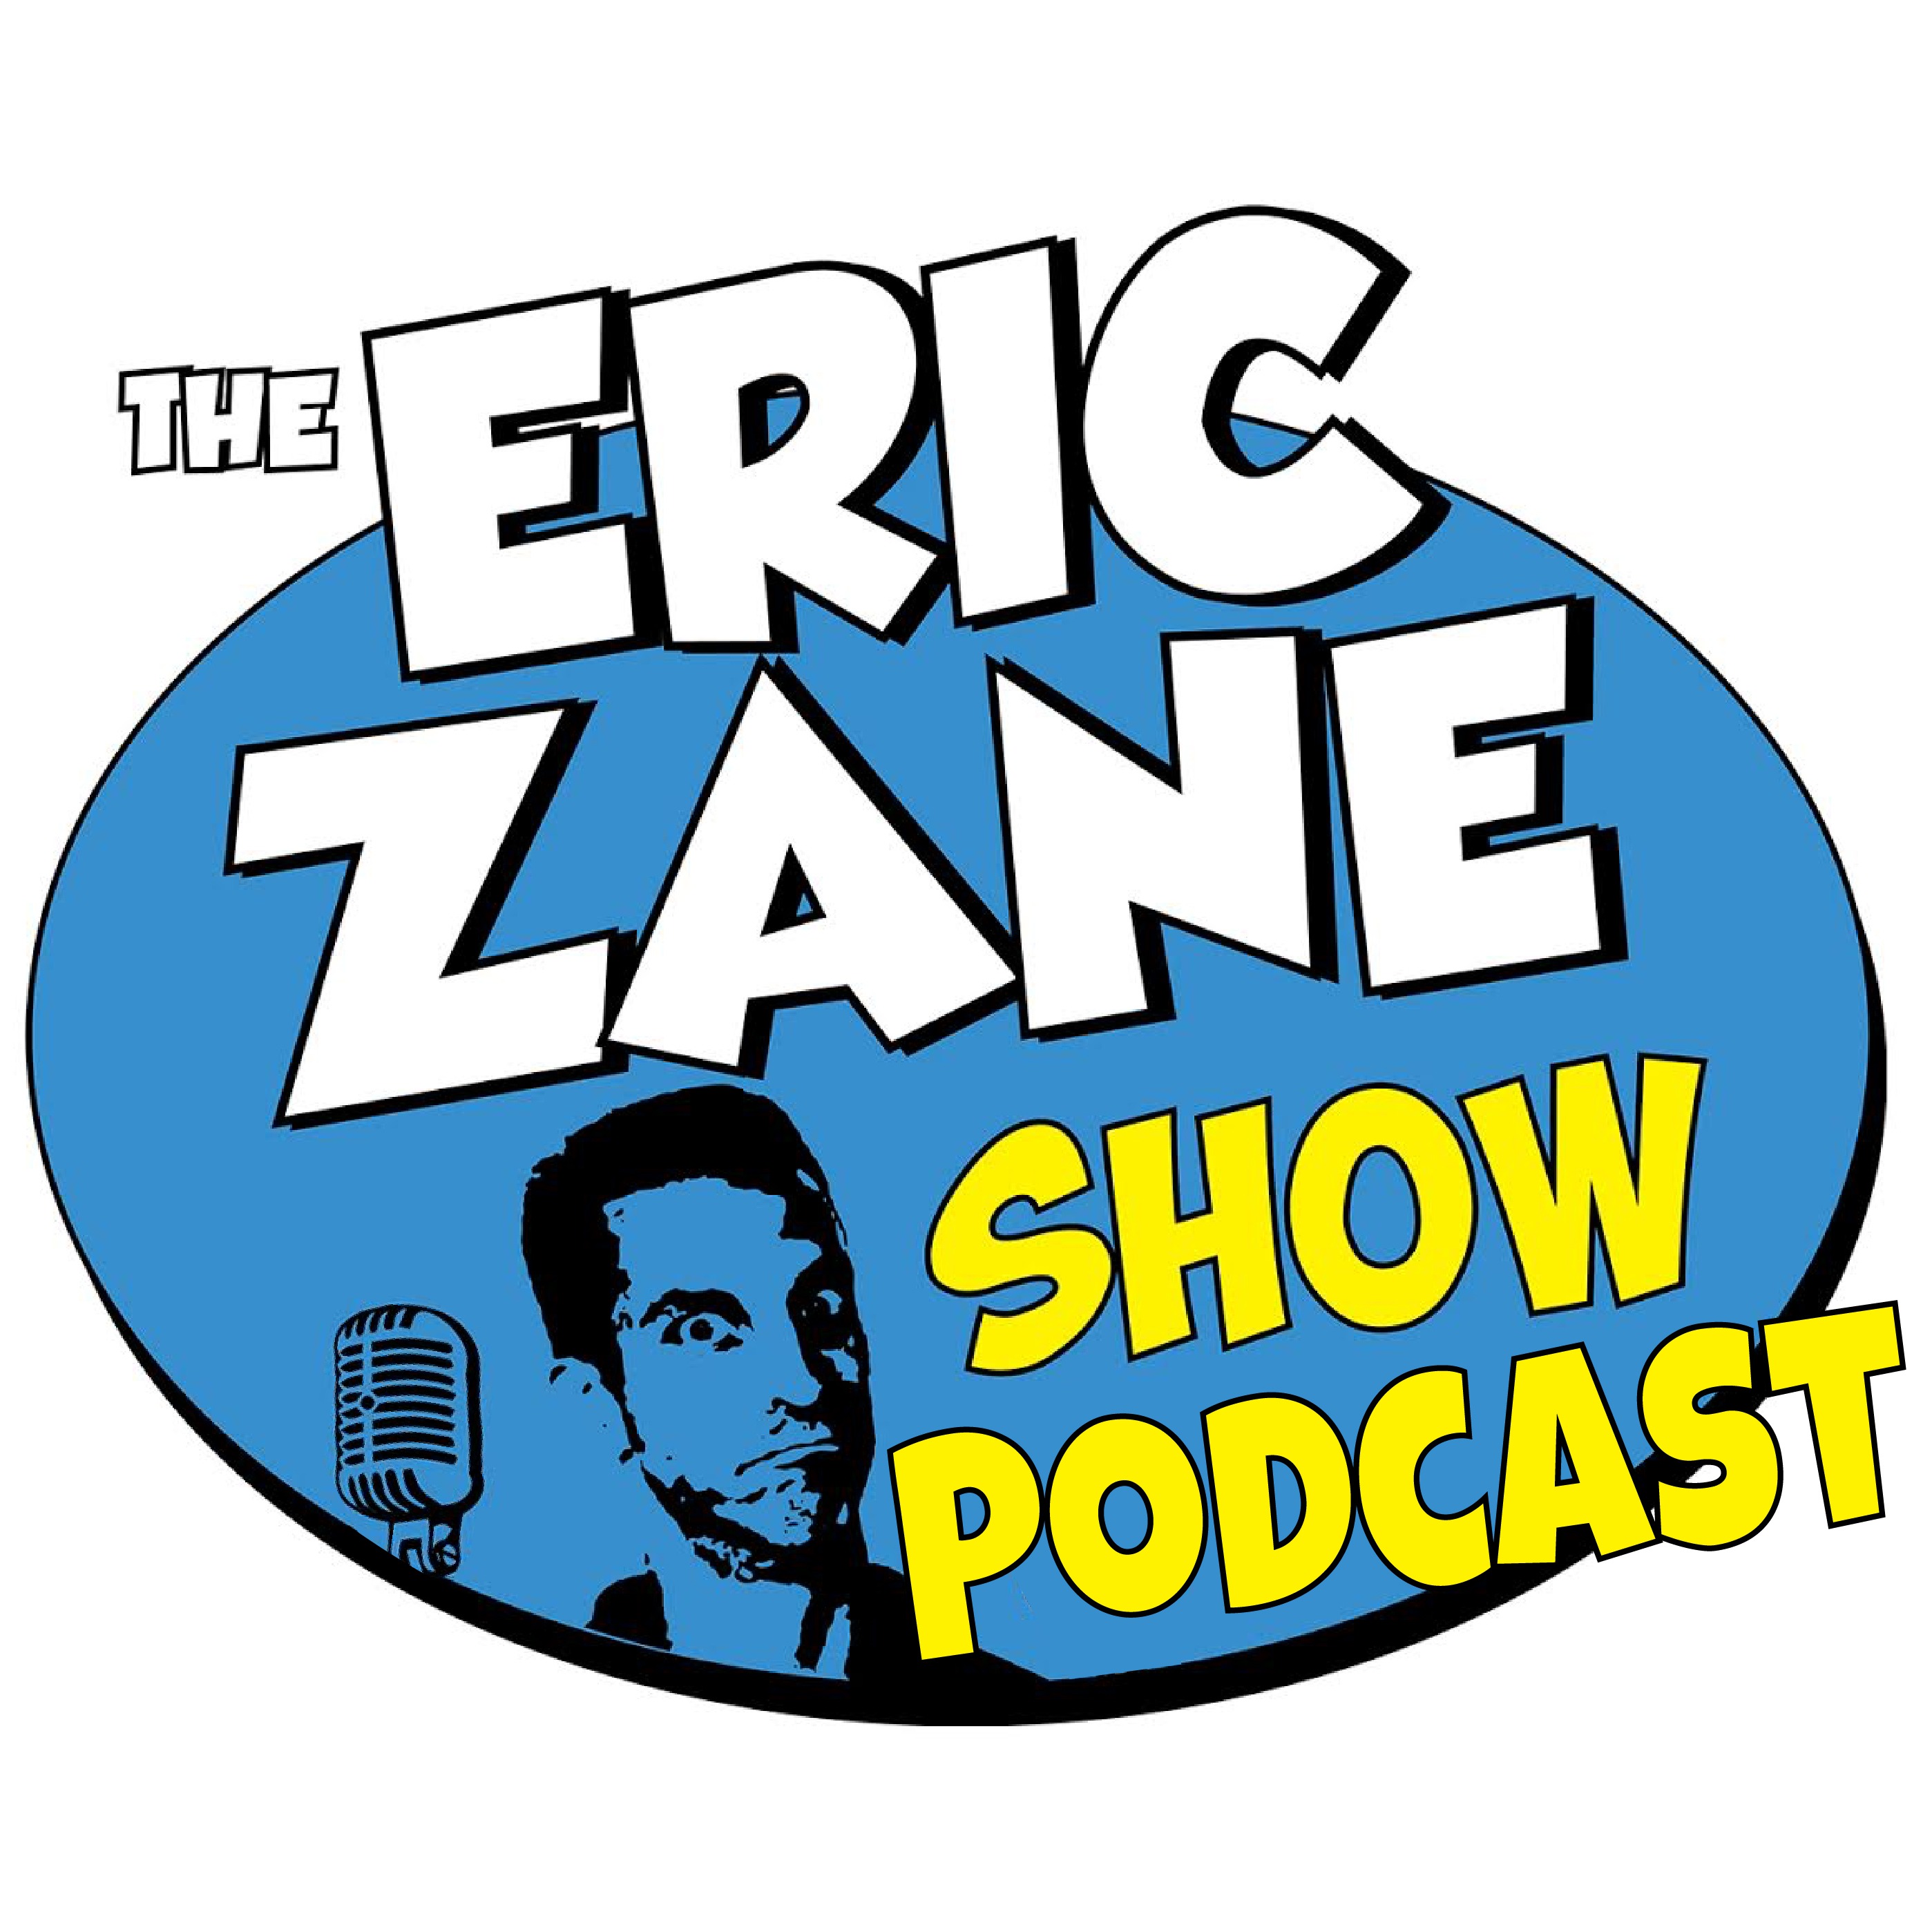 Eric Zane Show Podcast 966 - Holy shit, it's Christmas